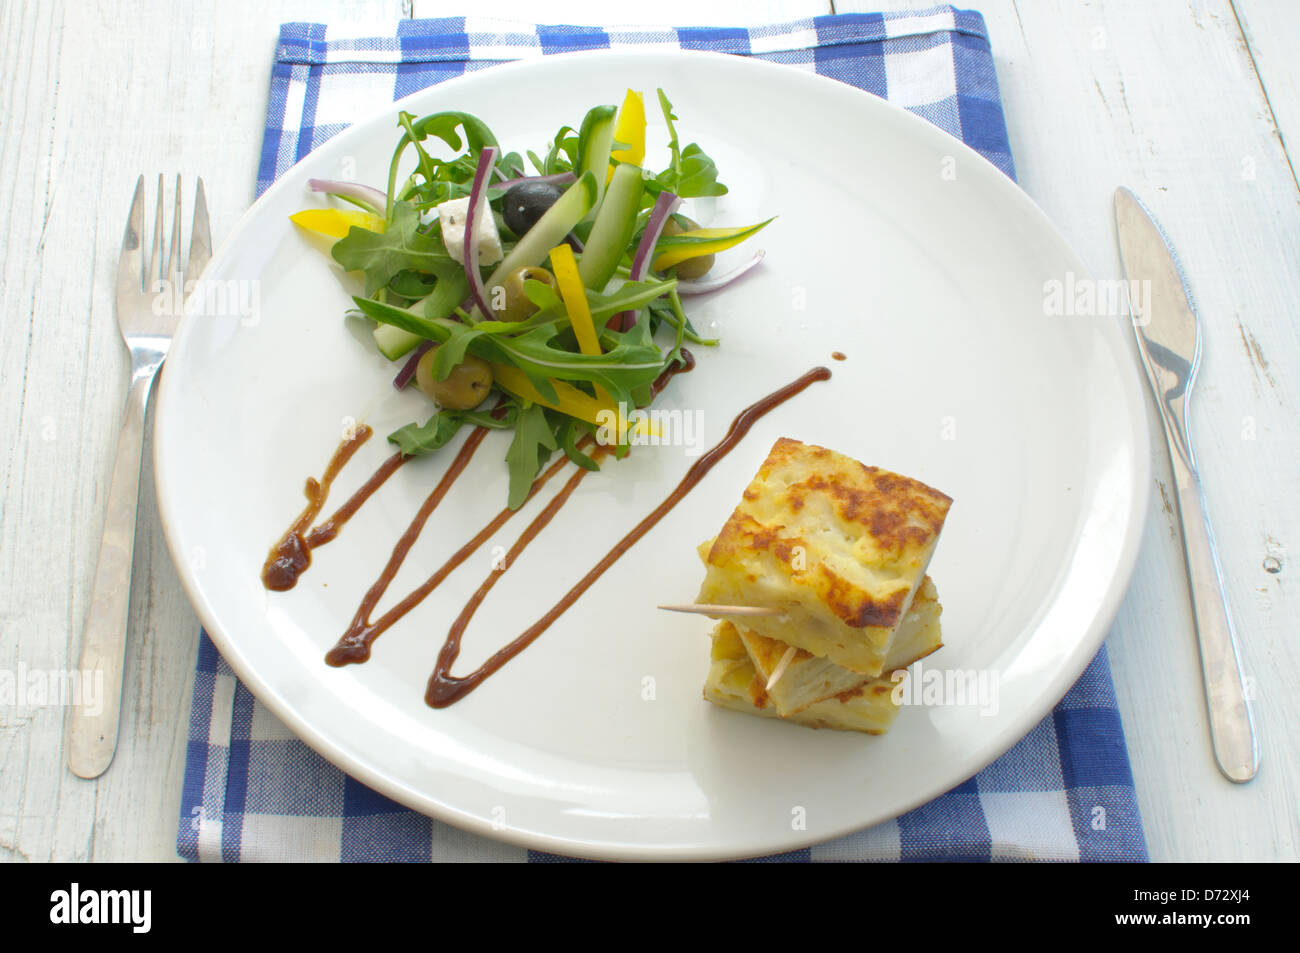 Spanish potato omelette with salad Stock Photo